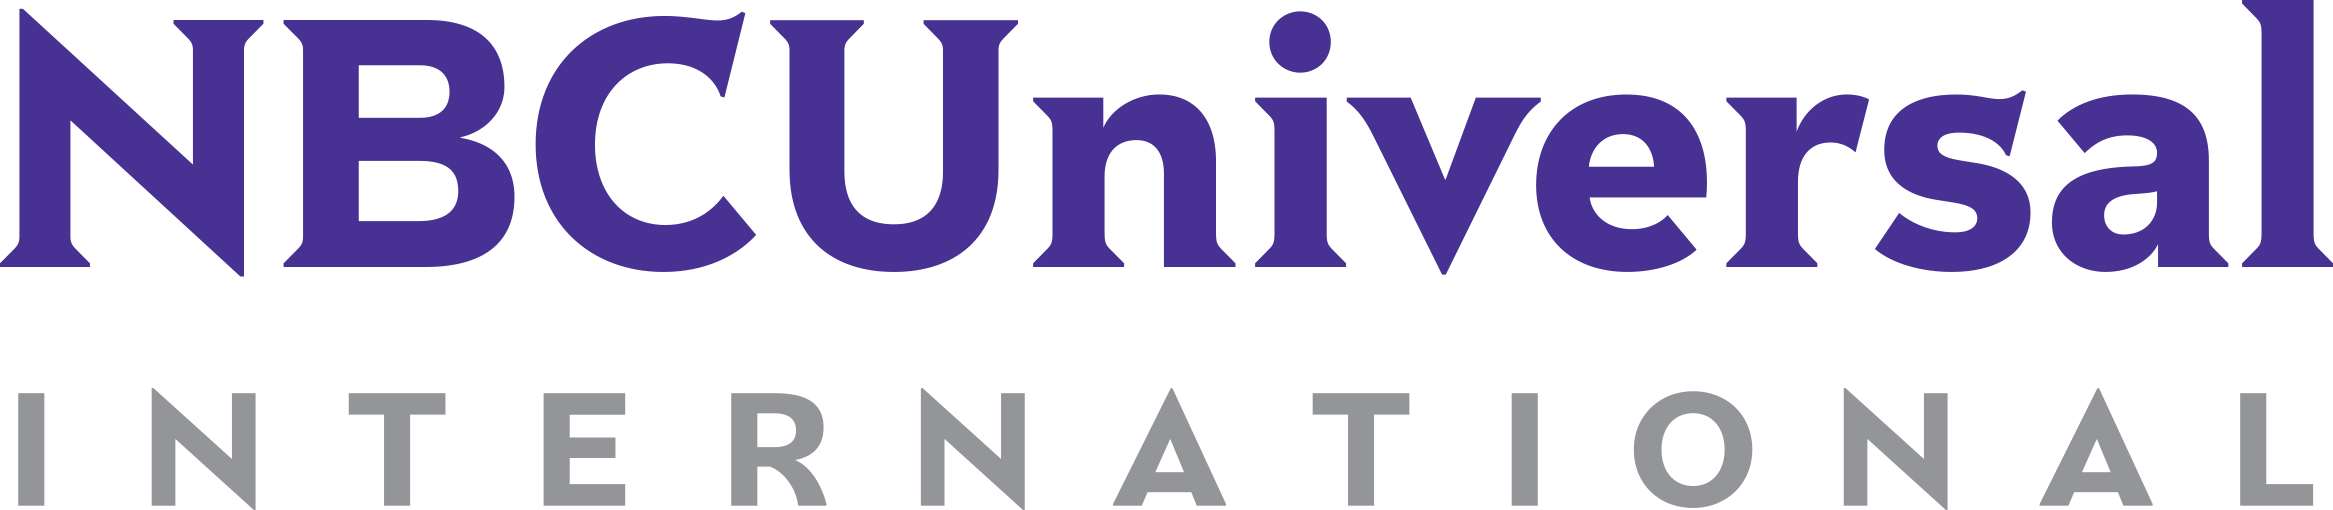 NBC Universal Logo - Home | NBCUniversal International Jobs and Careers